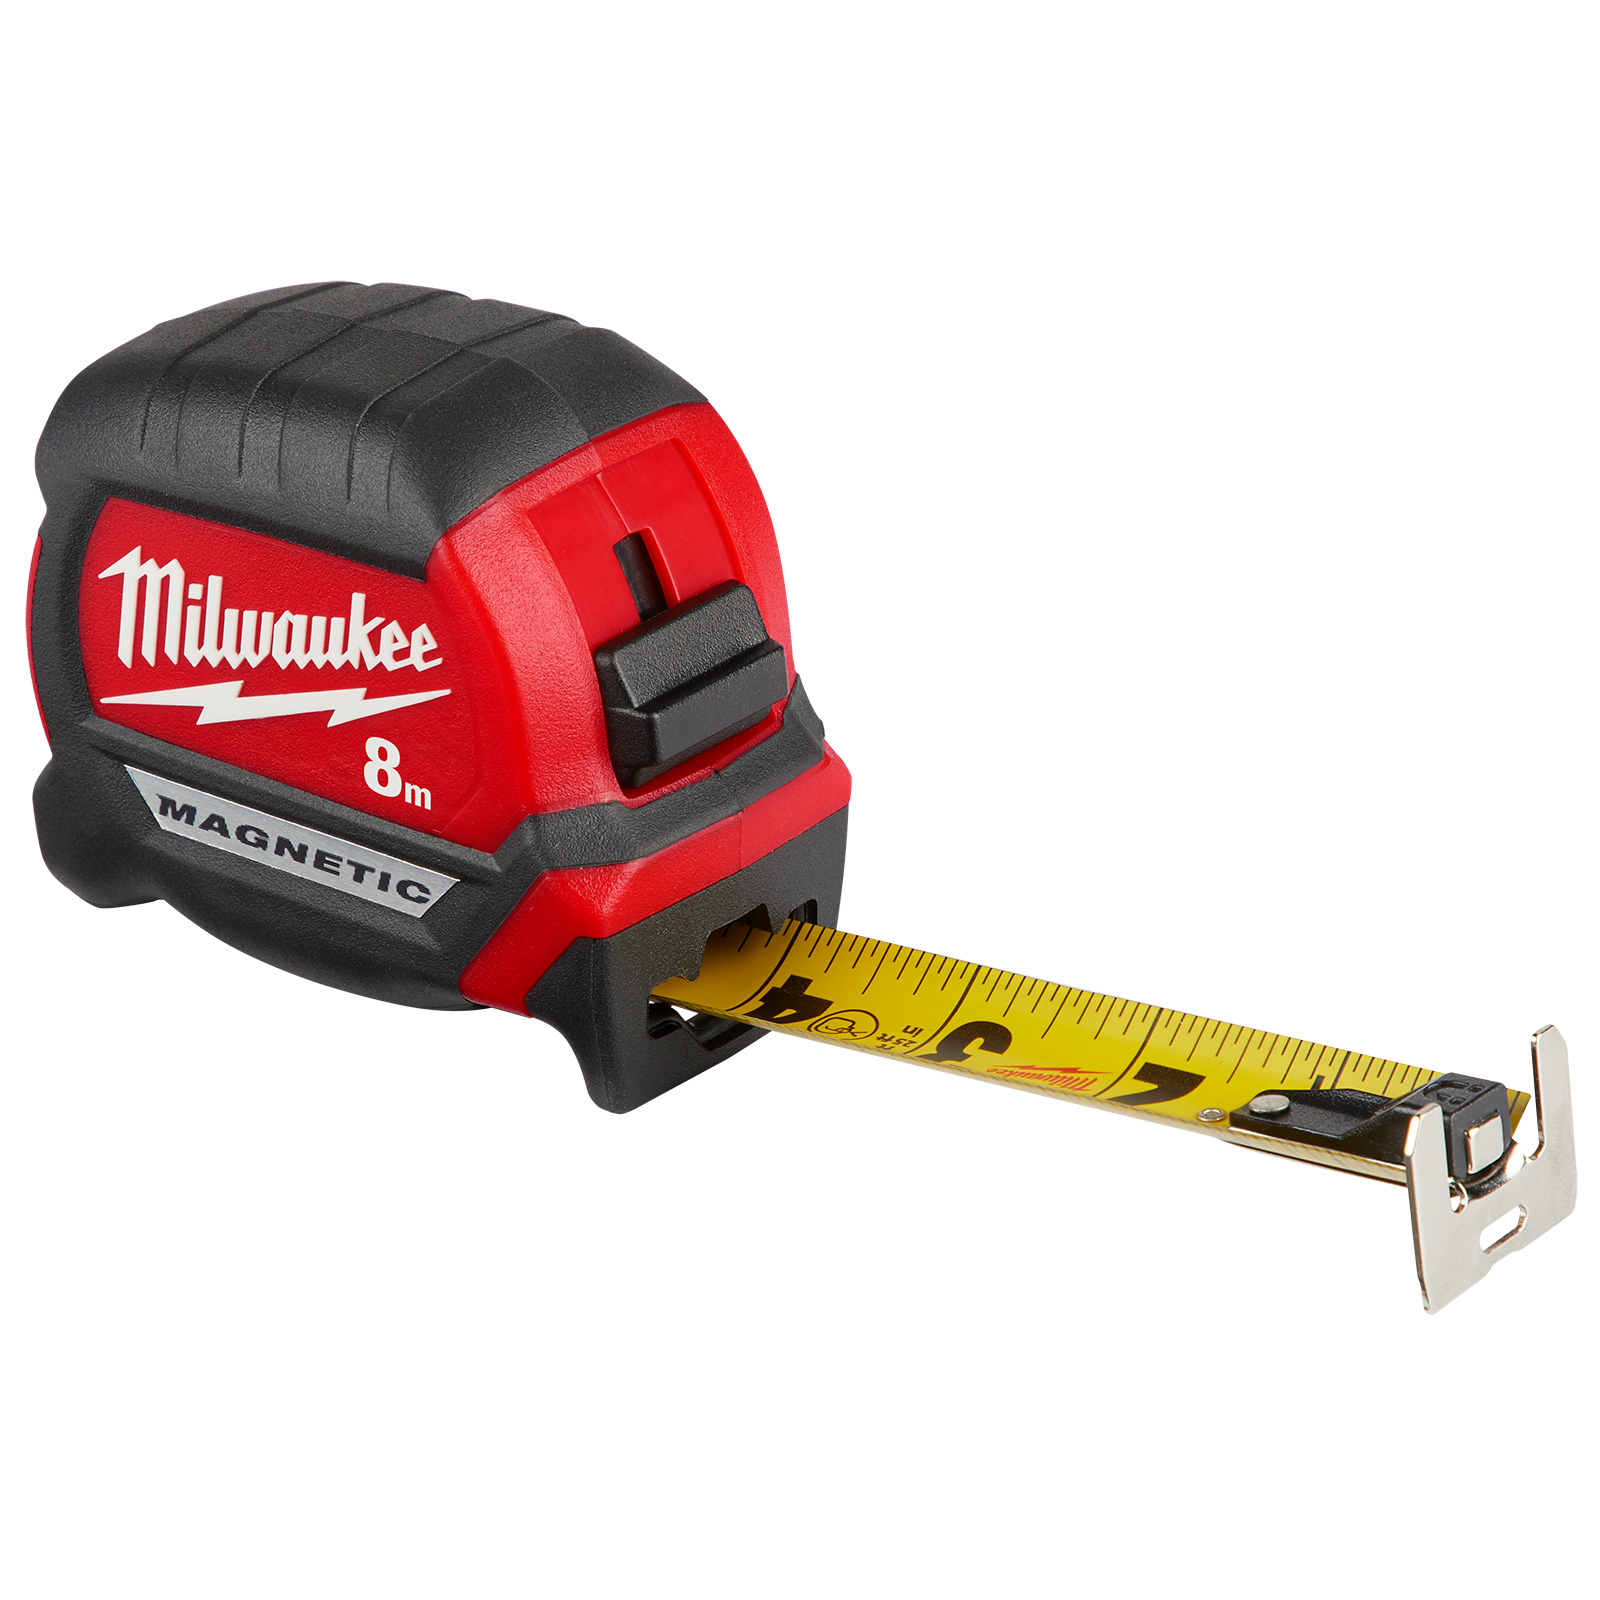 Milwaukee 8m Compact Magnetic Tape Measure 48220508